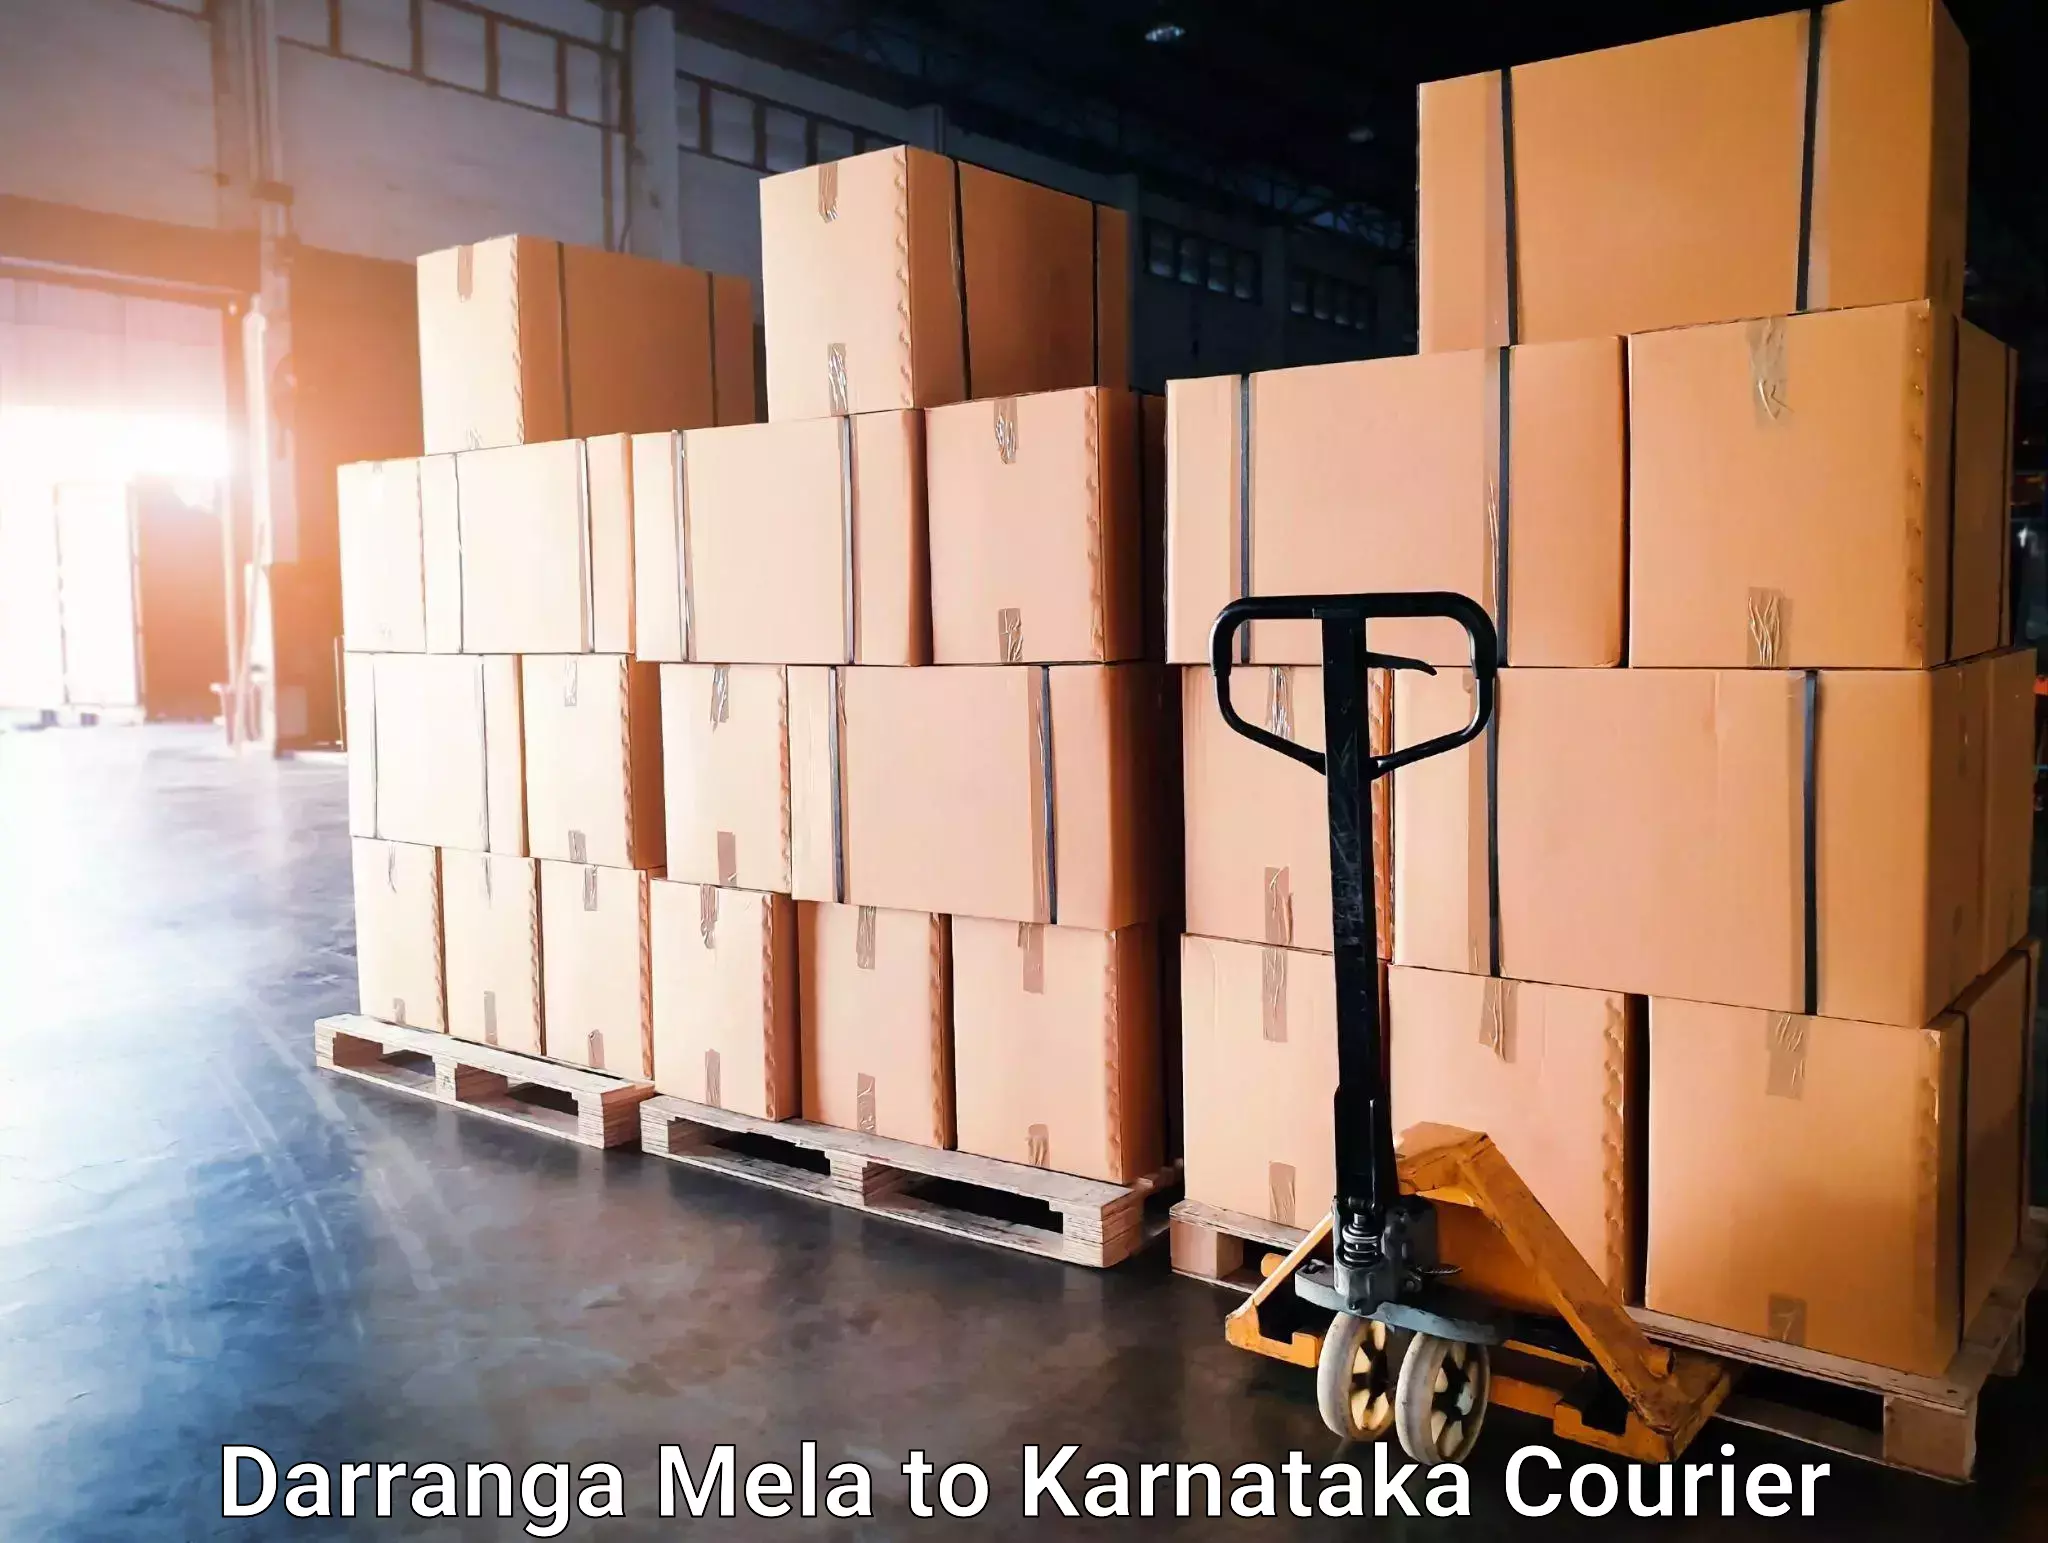 Courier service booking Darranga Mela to Sira